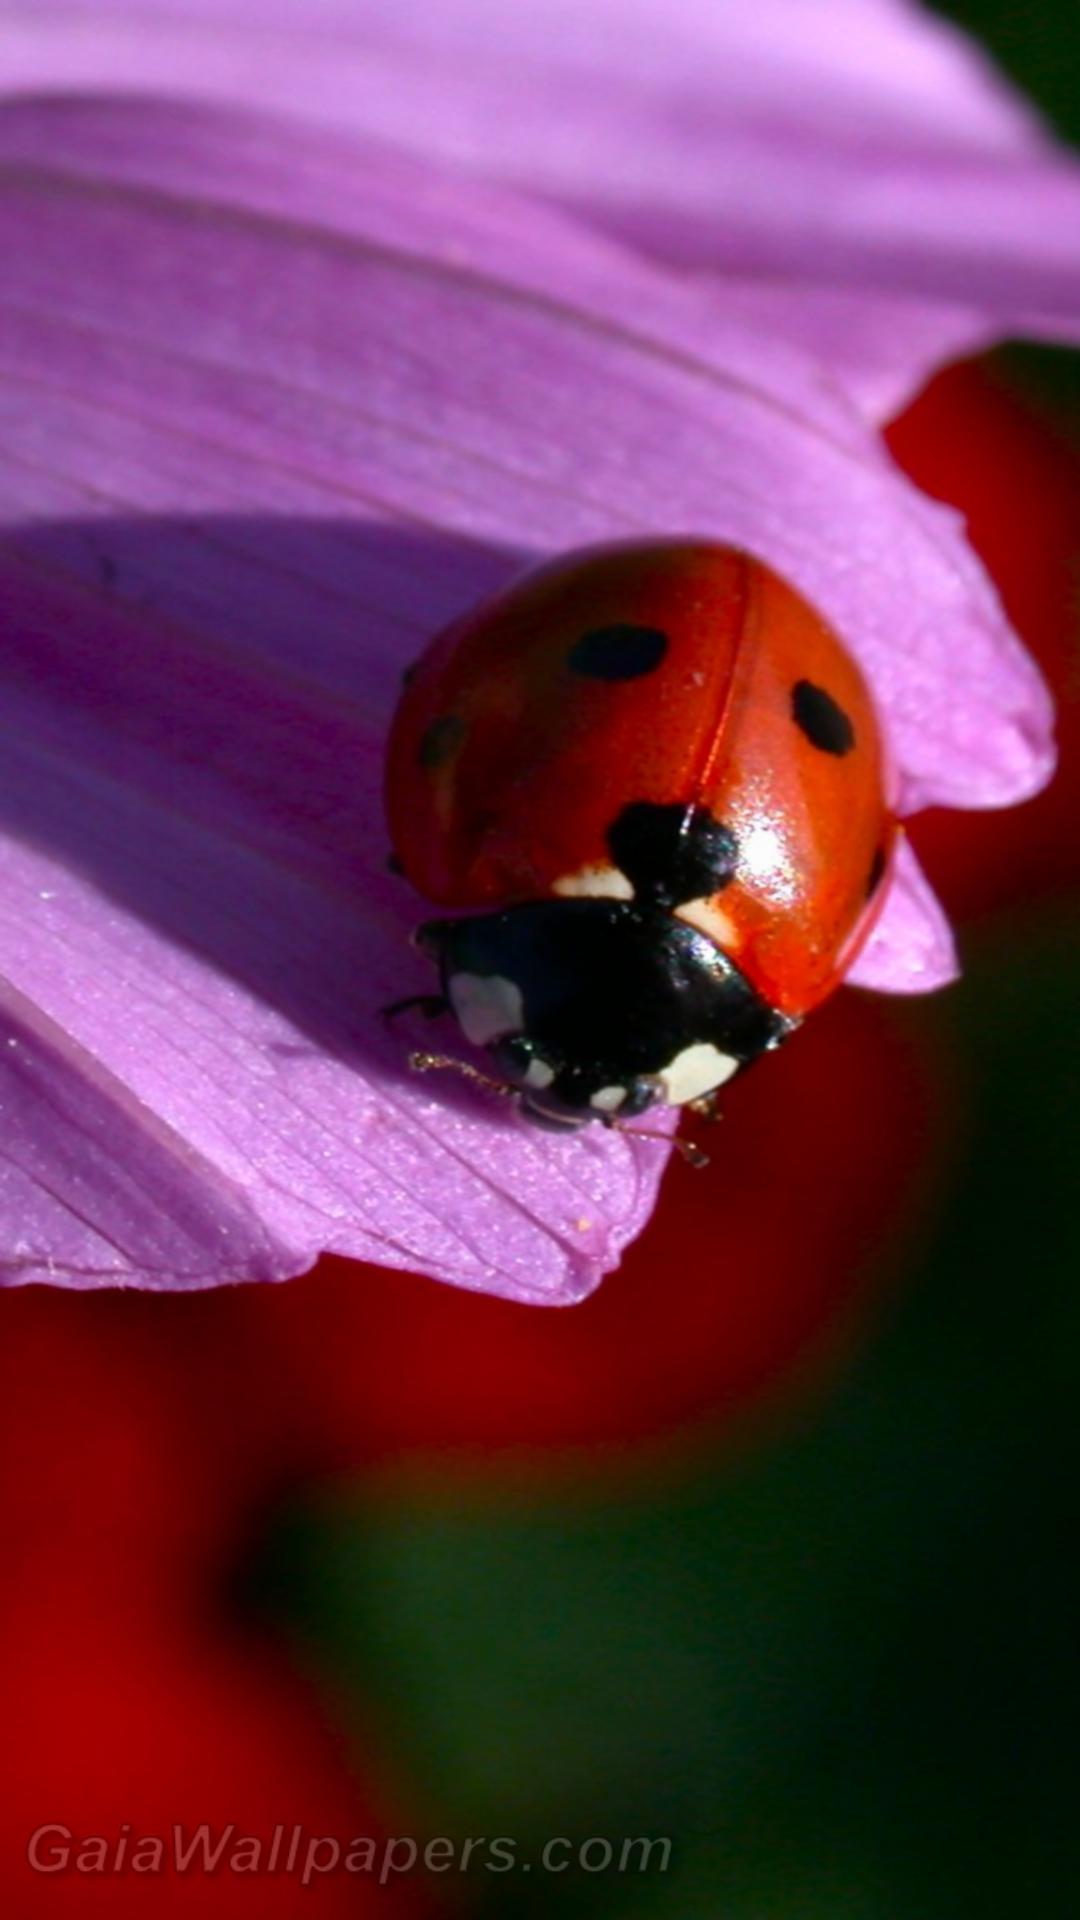 Ladybug on a flower - Free desktop wallpapers